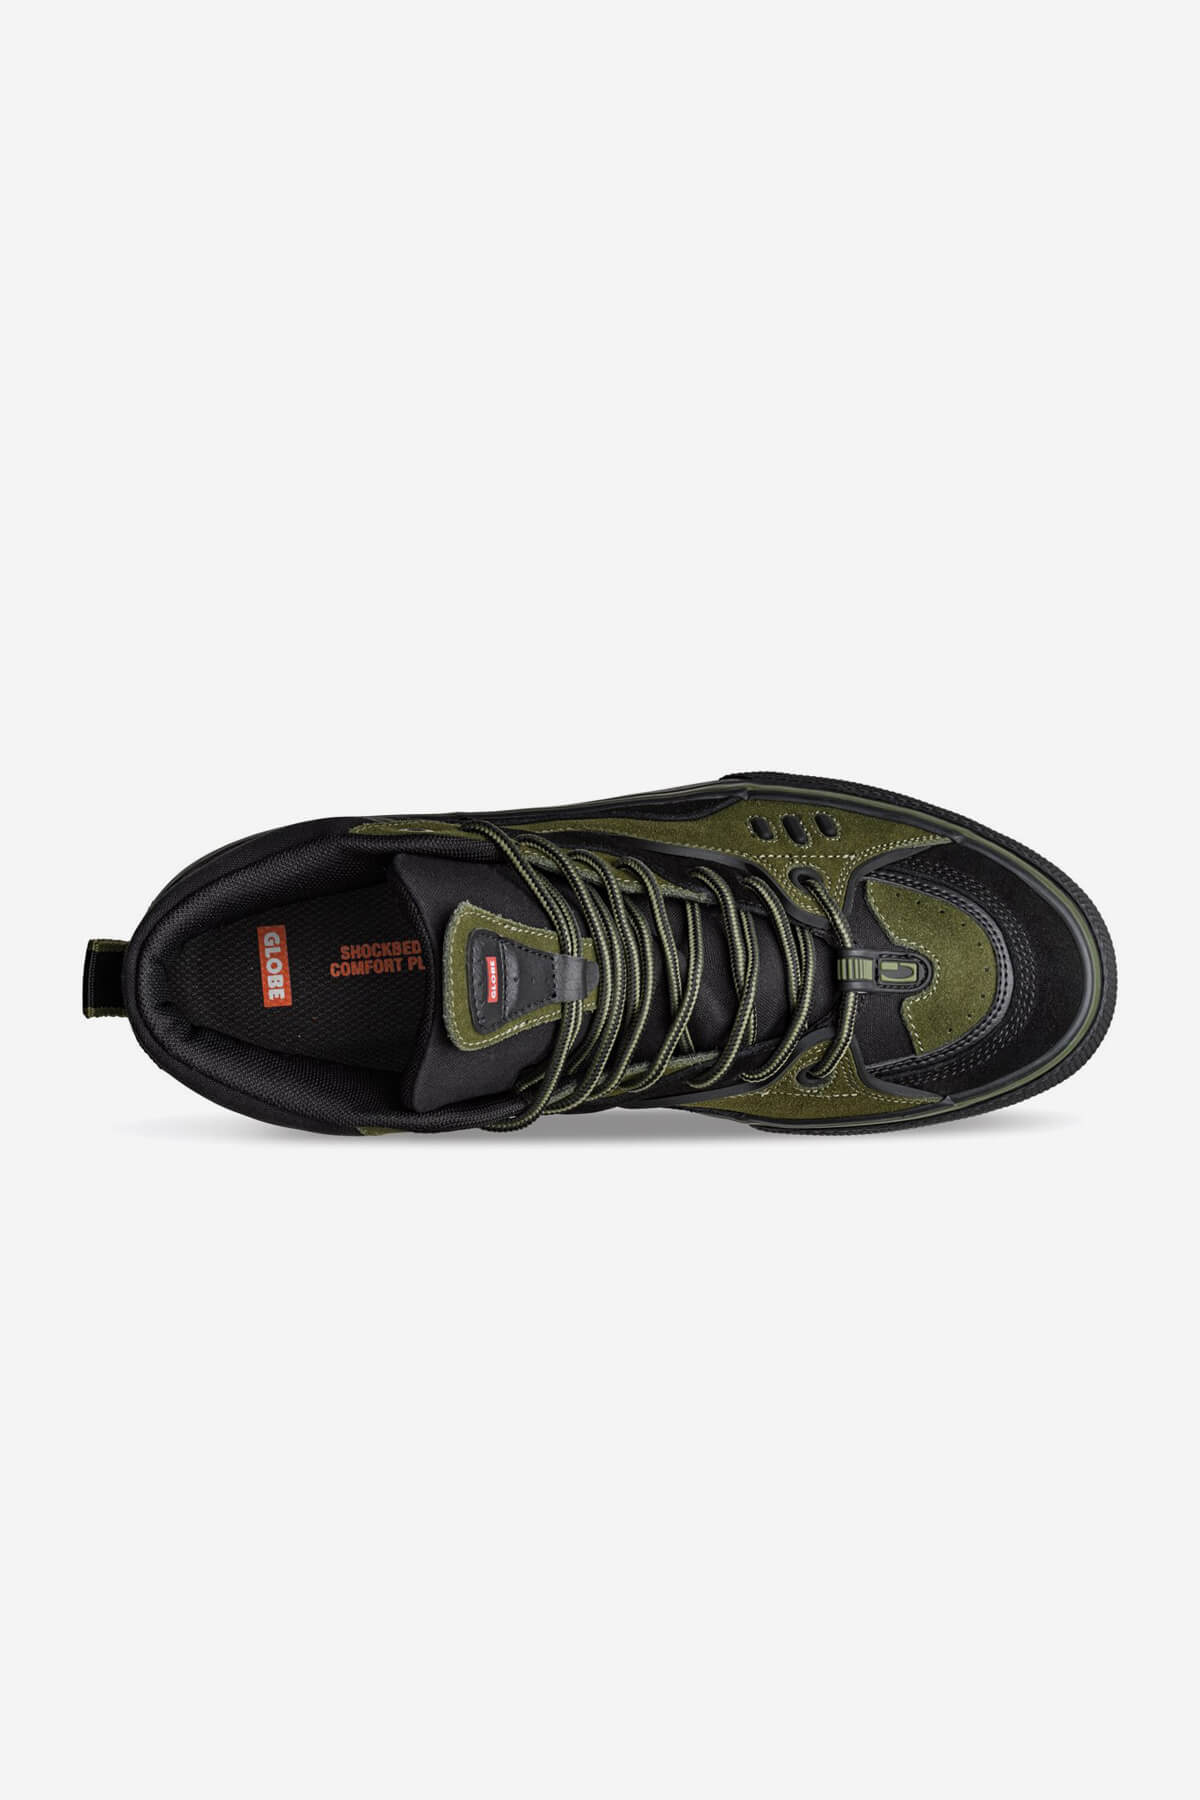 dimension zwart mos top skateboard schoenen